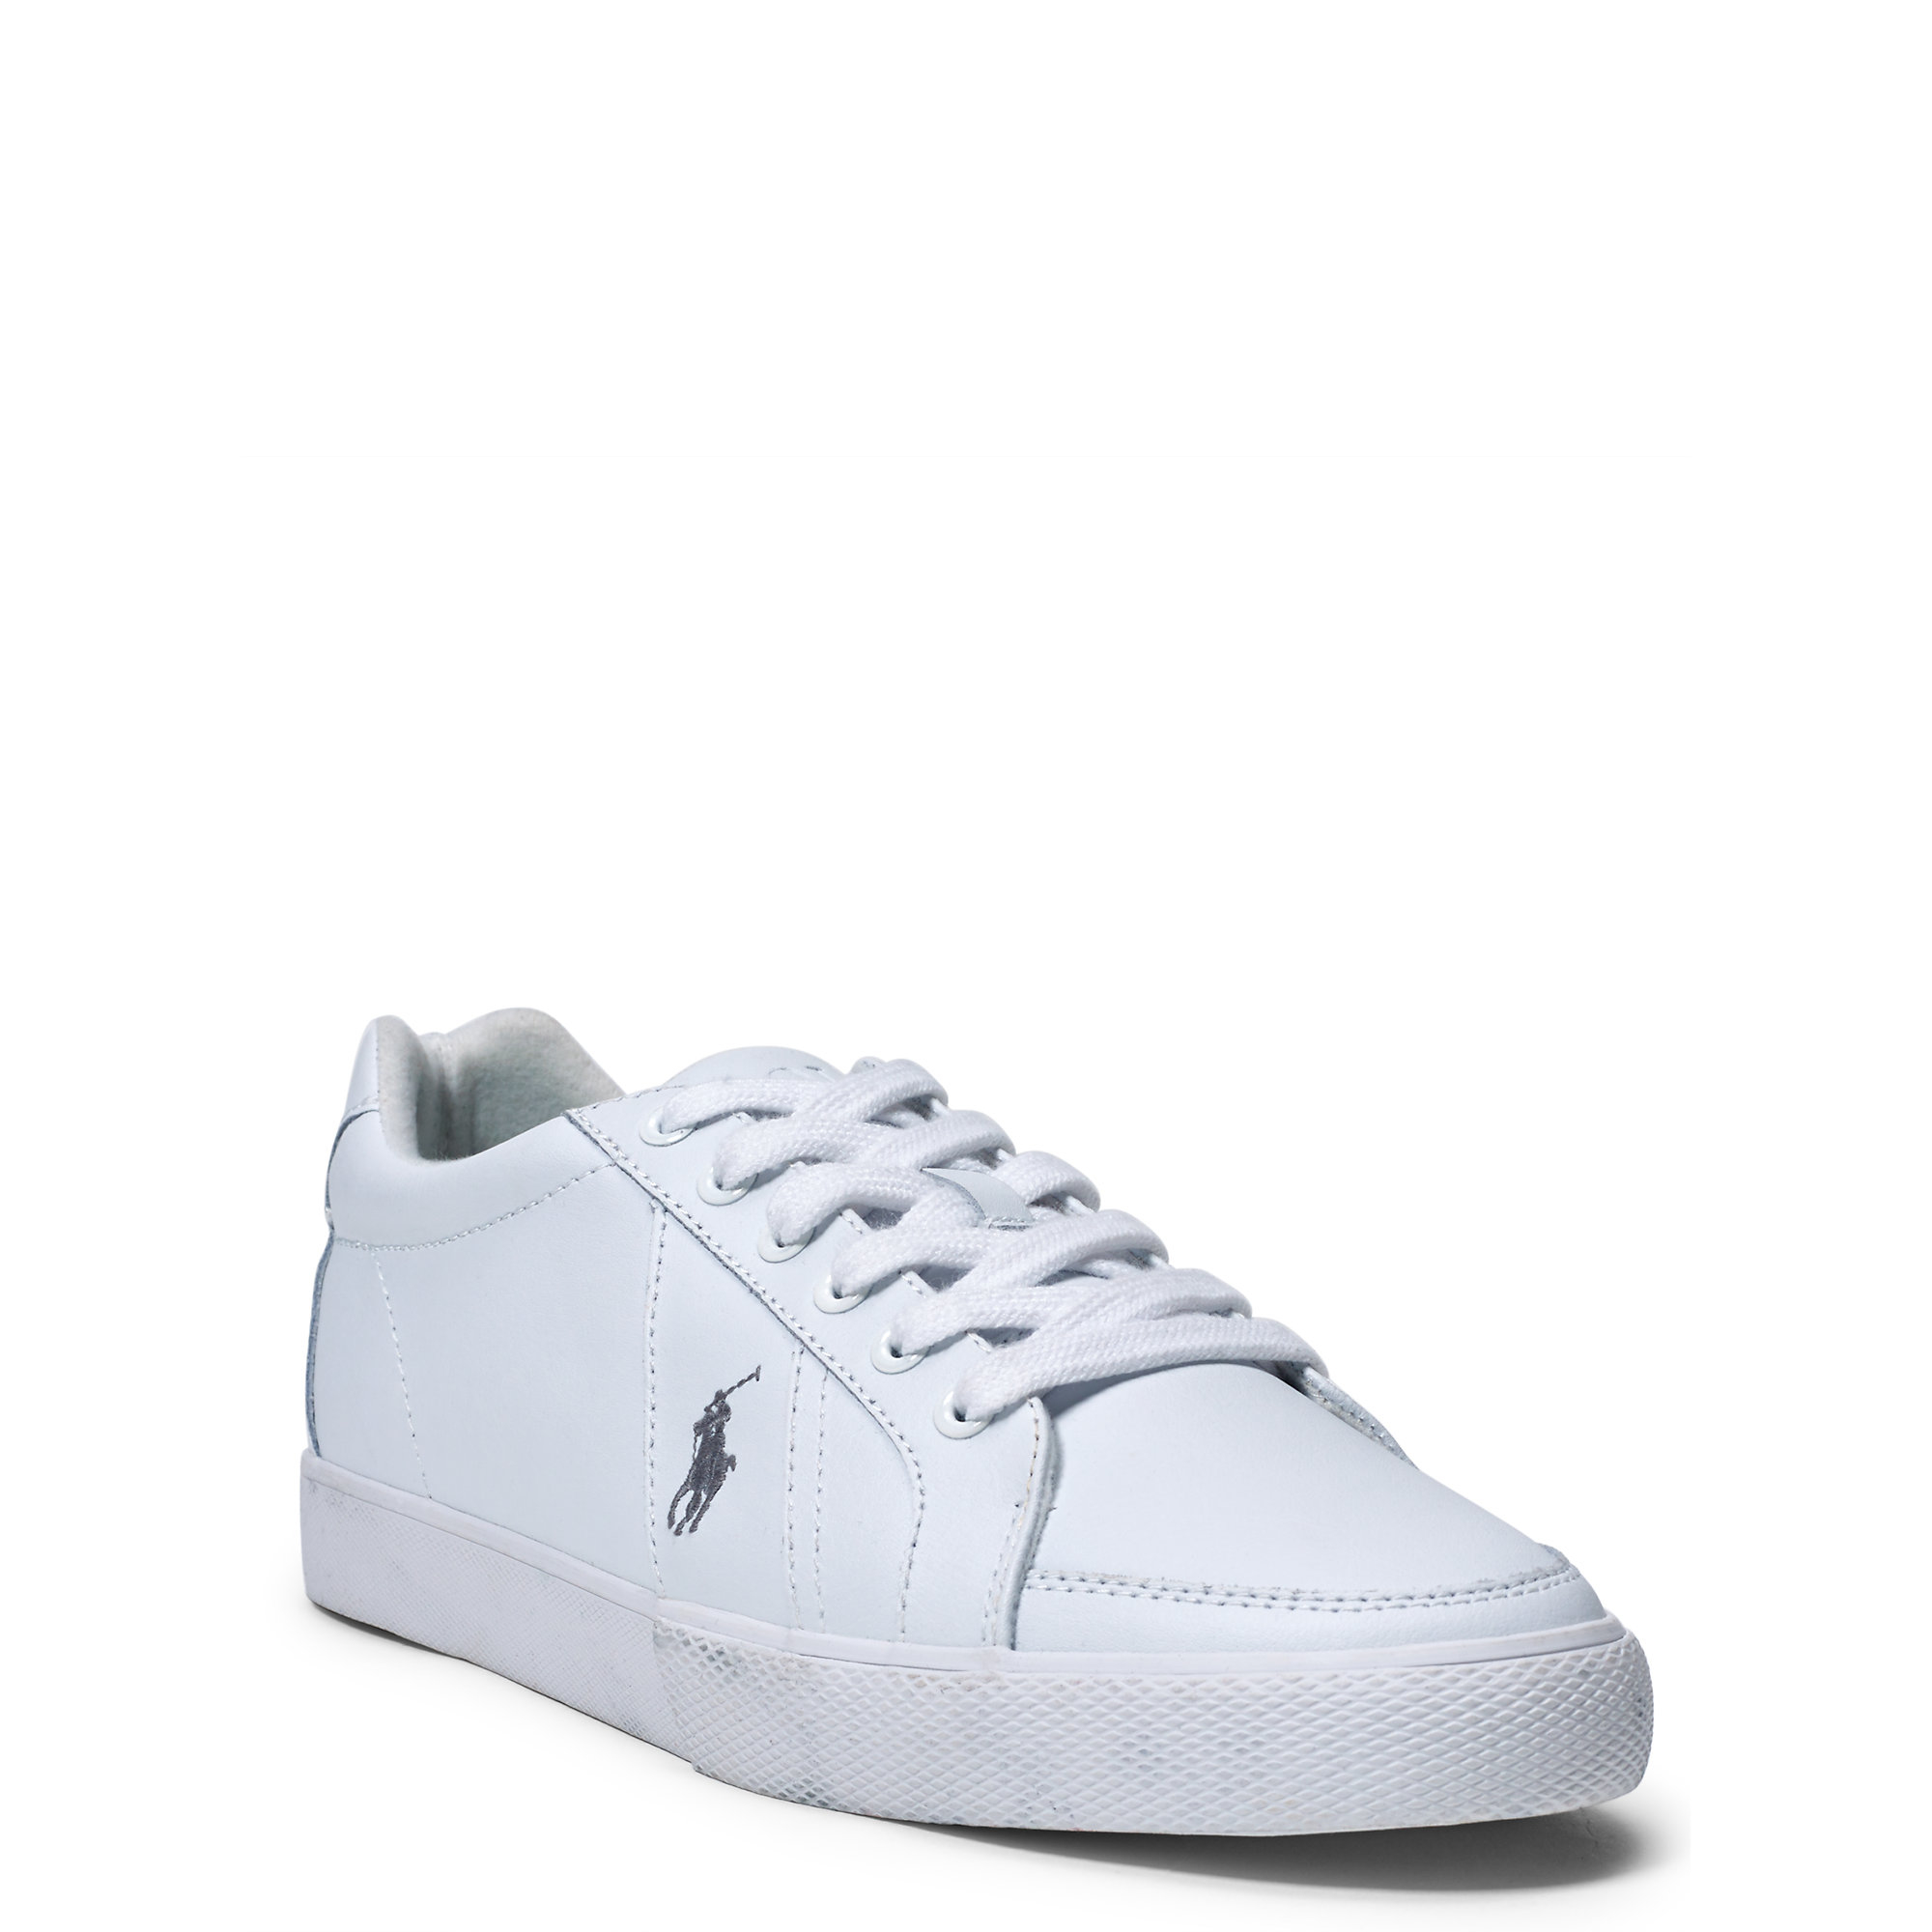 ralph lauren white tennis shoes